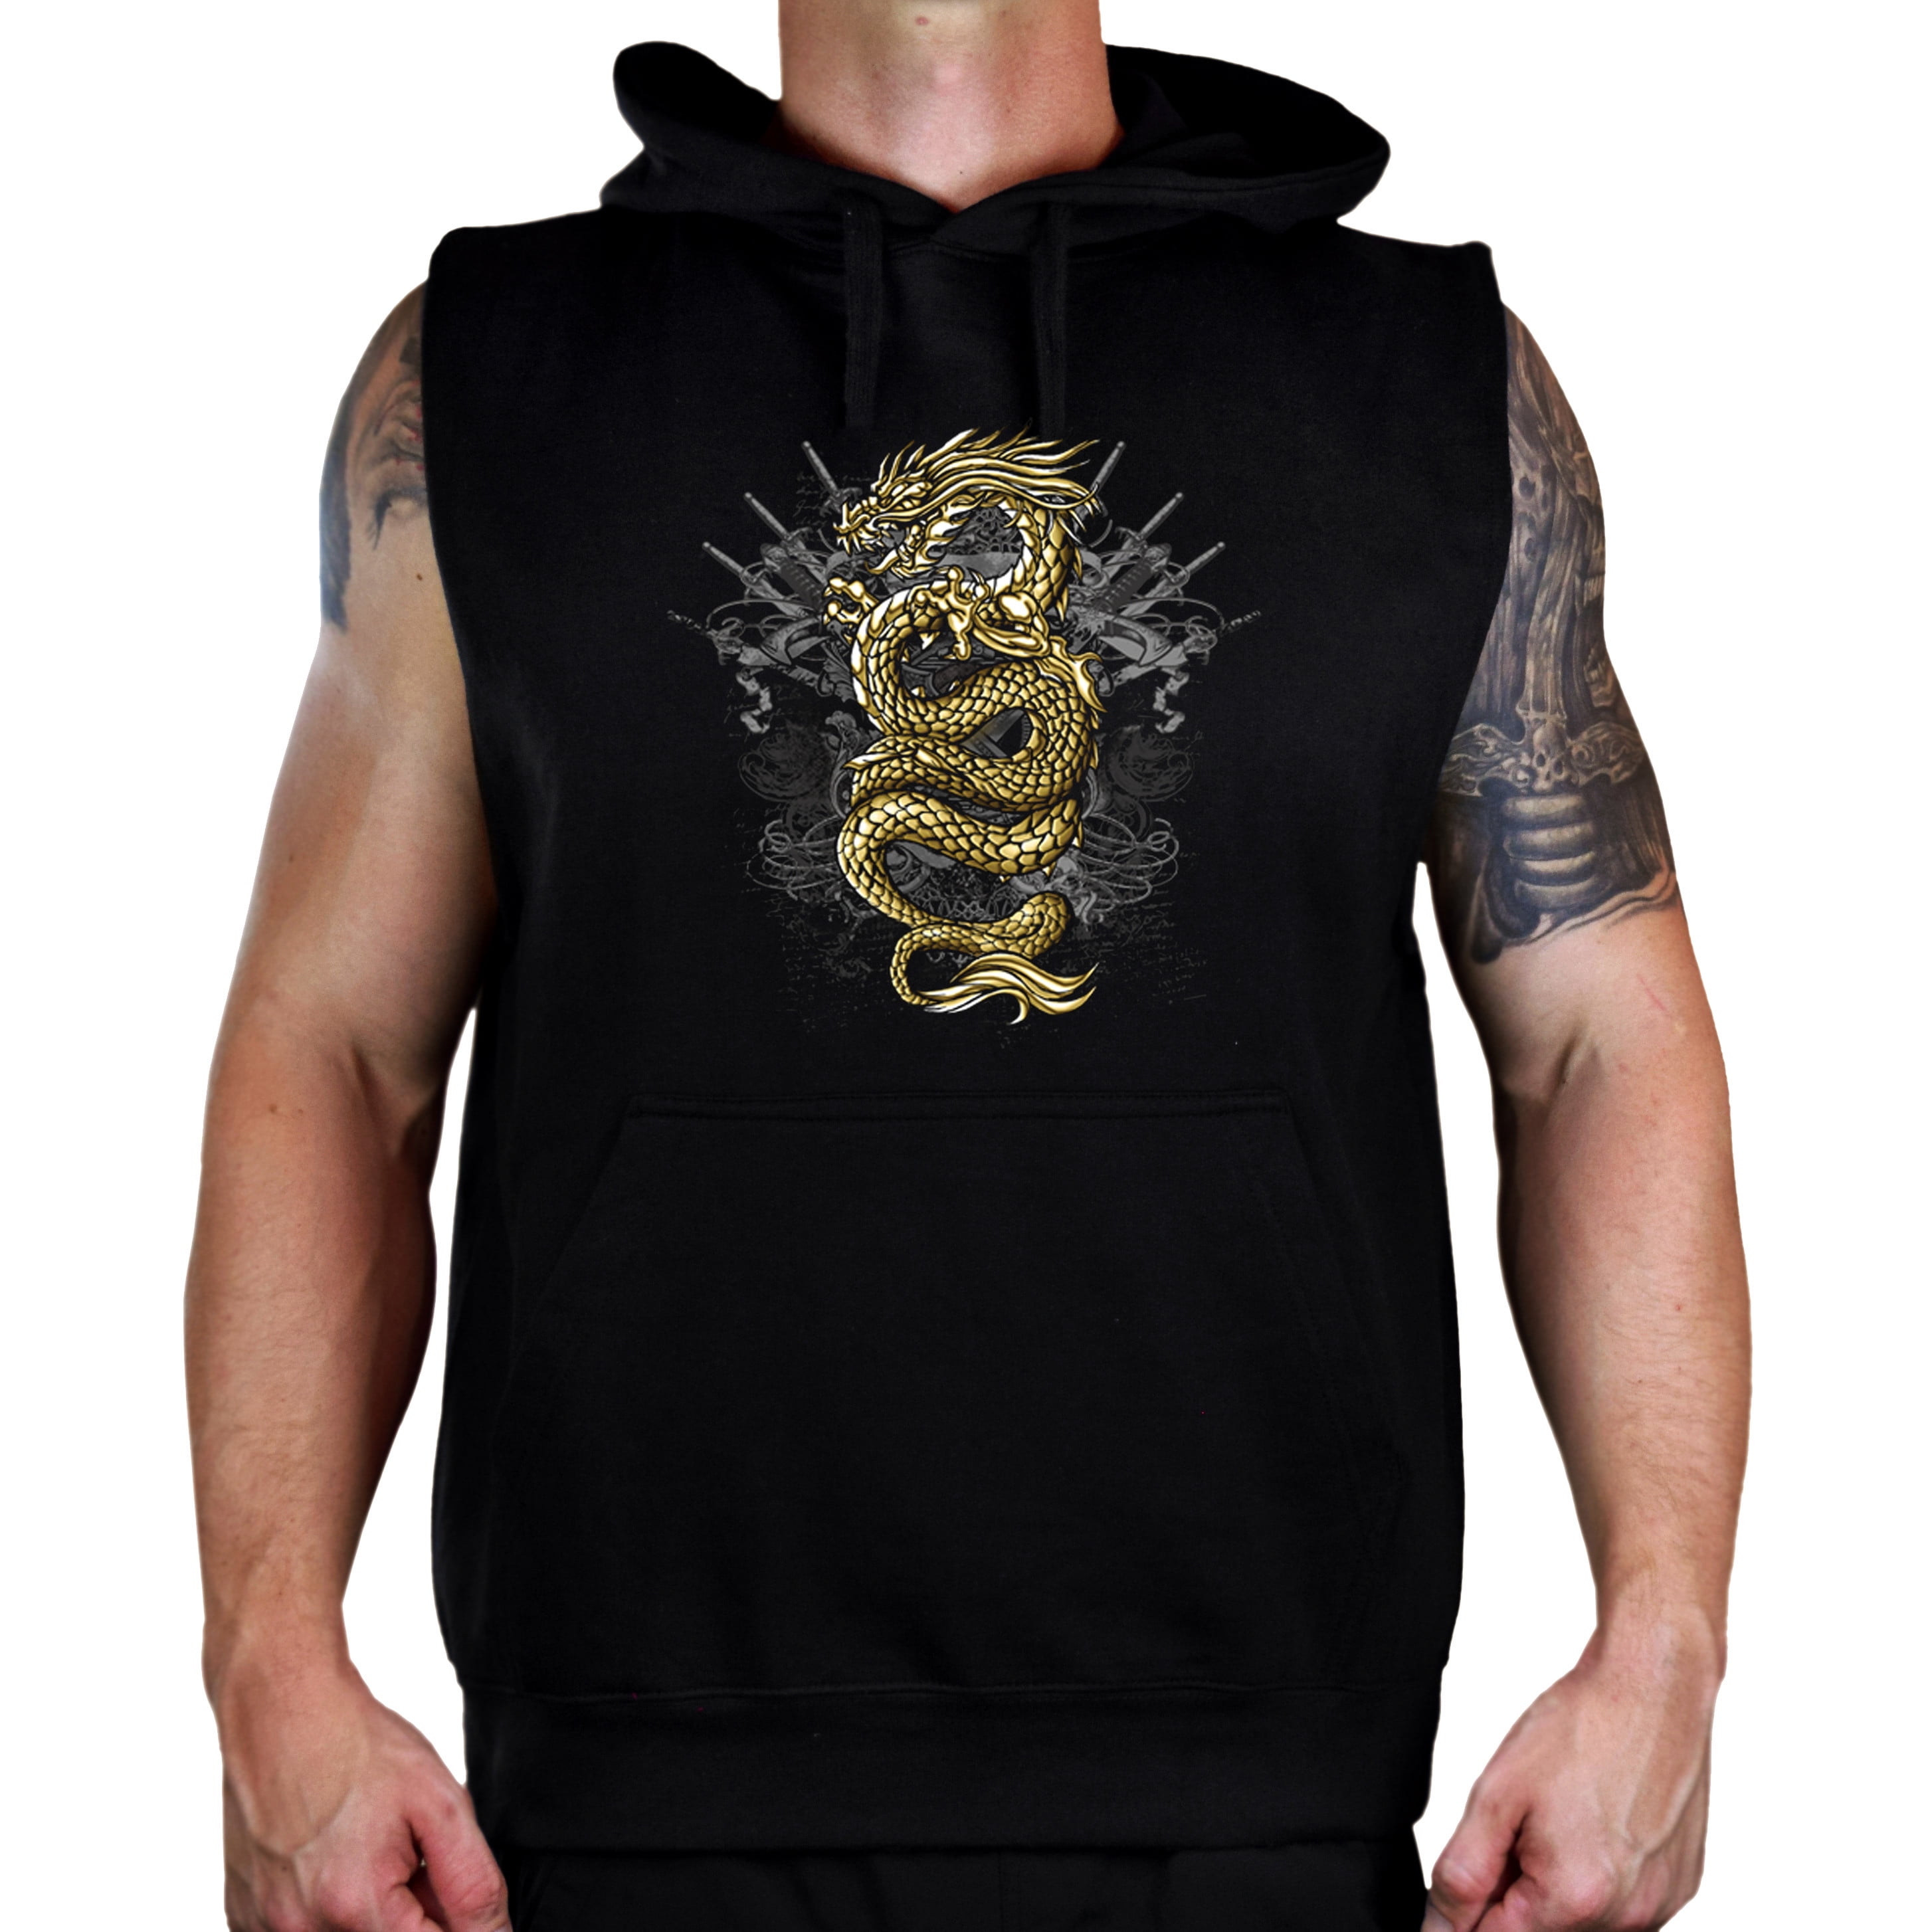 Men's Gold Dragon Black Sleeveless Vest Hoodie 2X-Large Black 